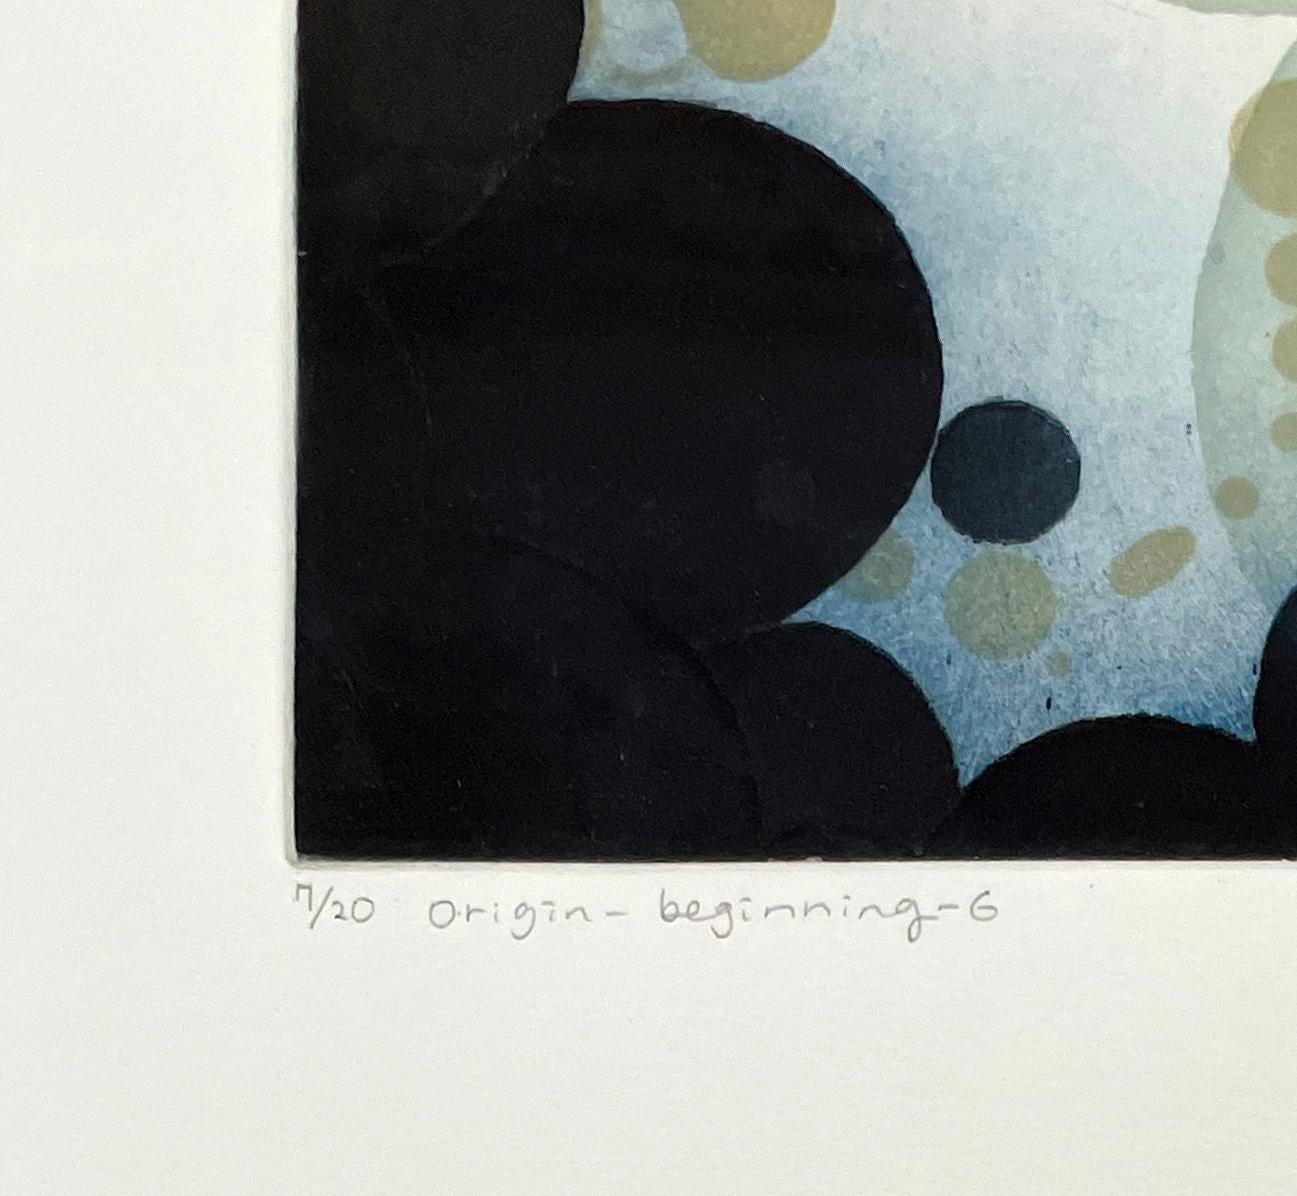 Origin-Beginning-6 (9/20) - Gray Abstract Print by Seiko Tachibana